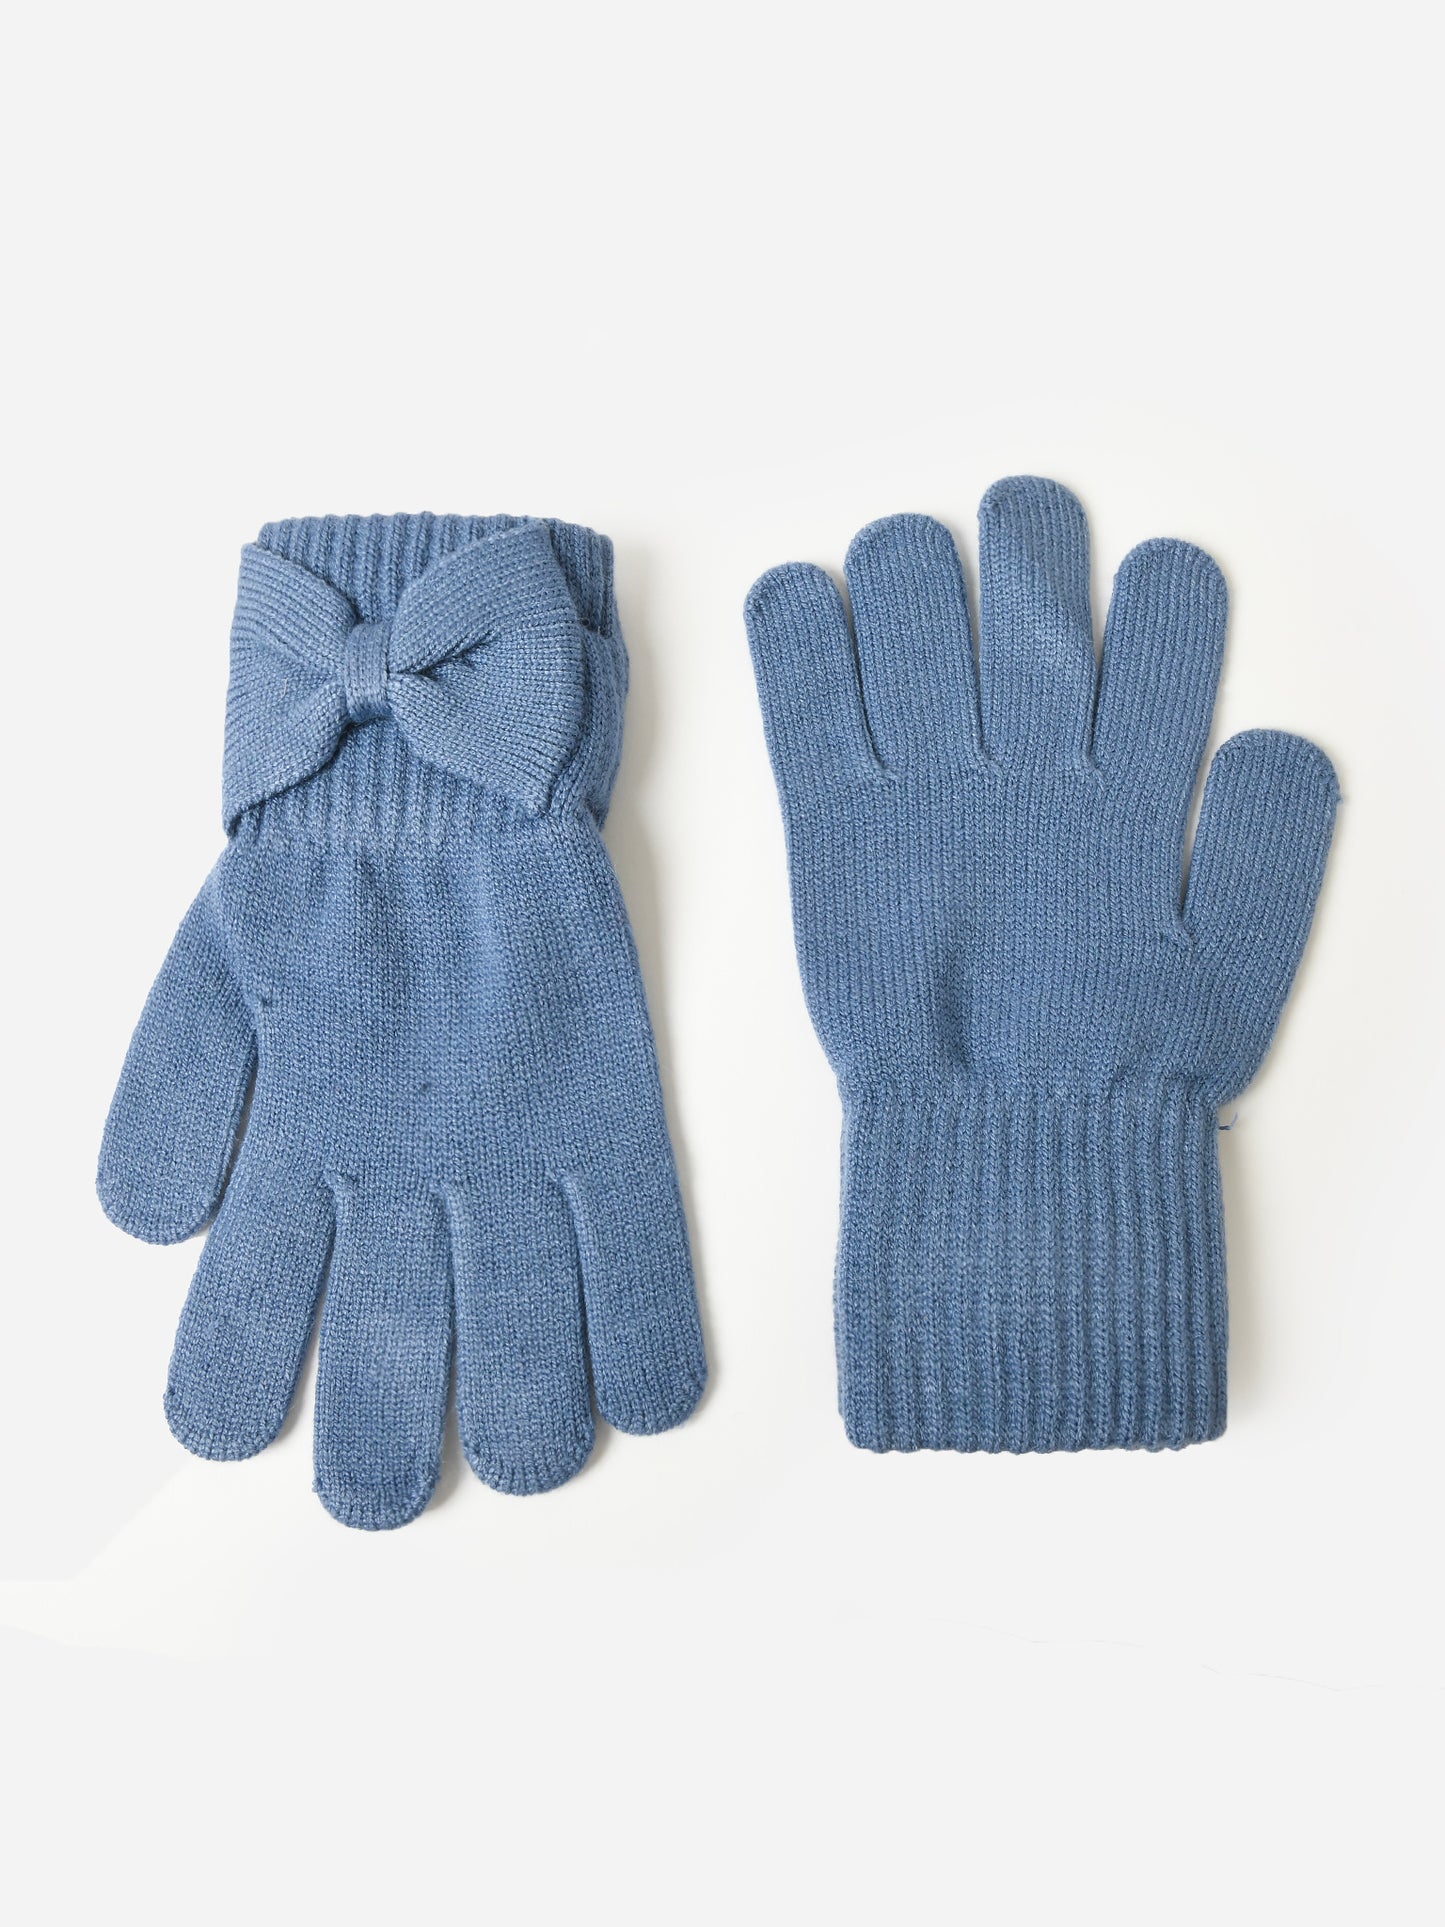 Mayoral Girls' Bow Knit Glove